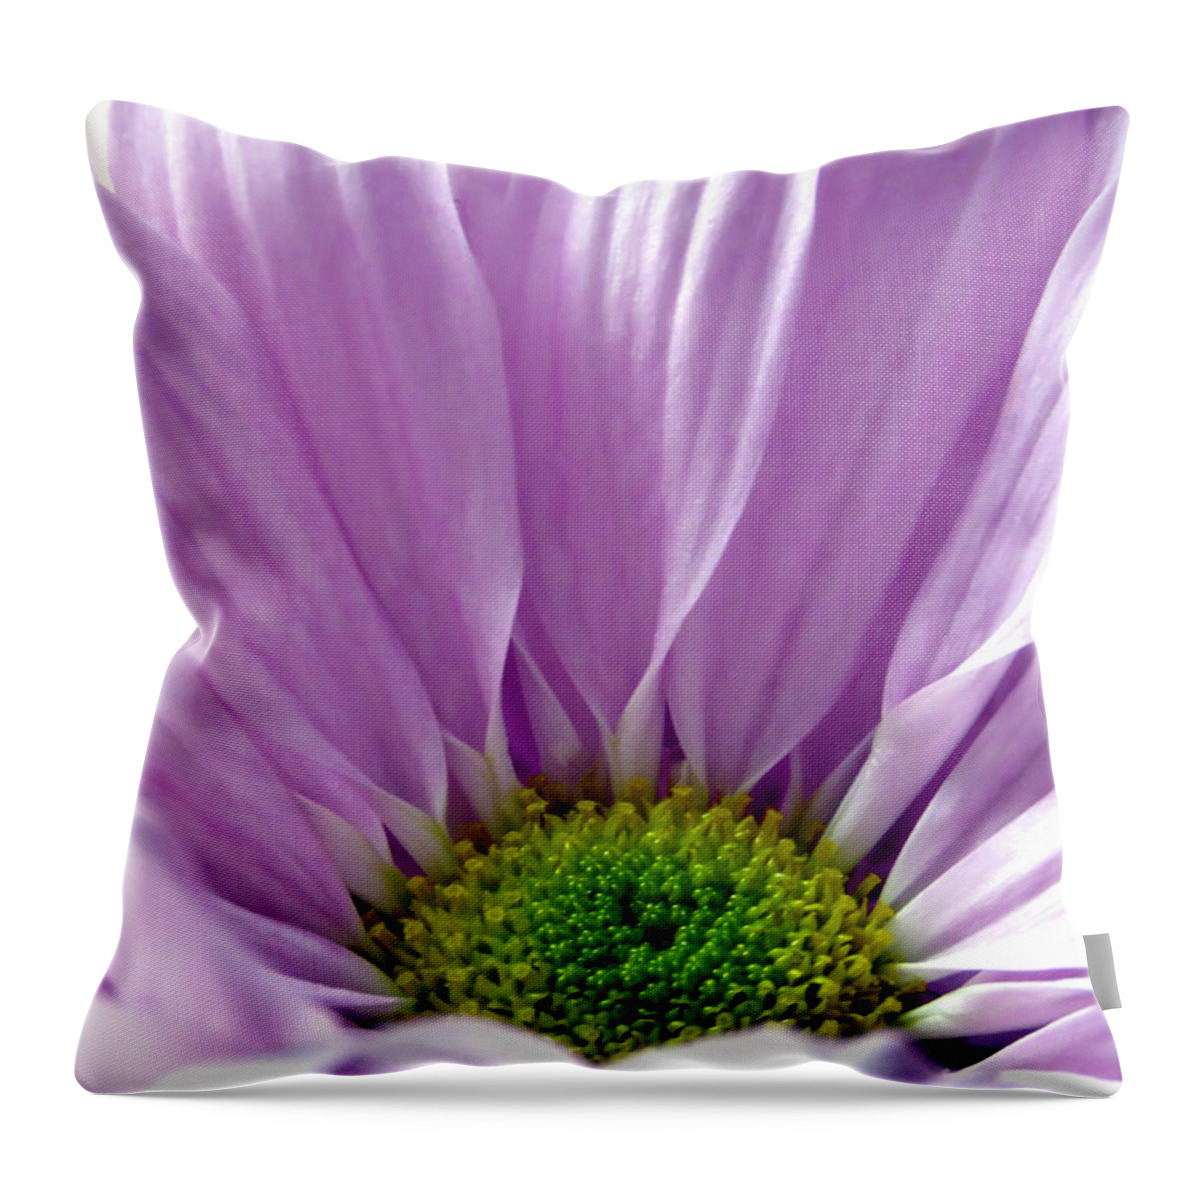 Flower Throw Pillow featuring the photograph Flower Macro Beauty by Johanna Hurmerinta